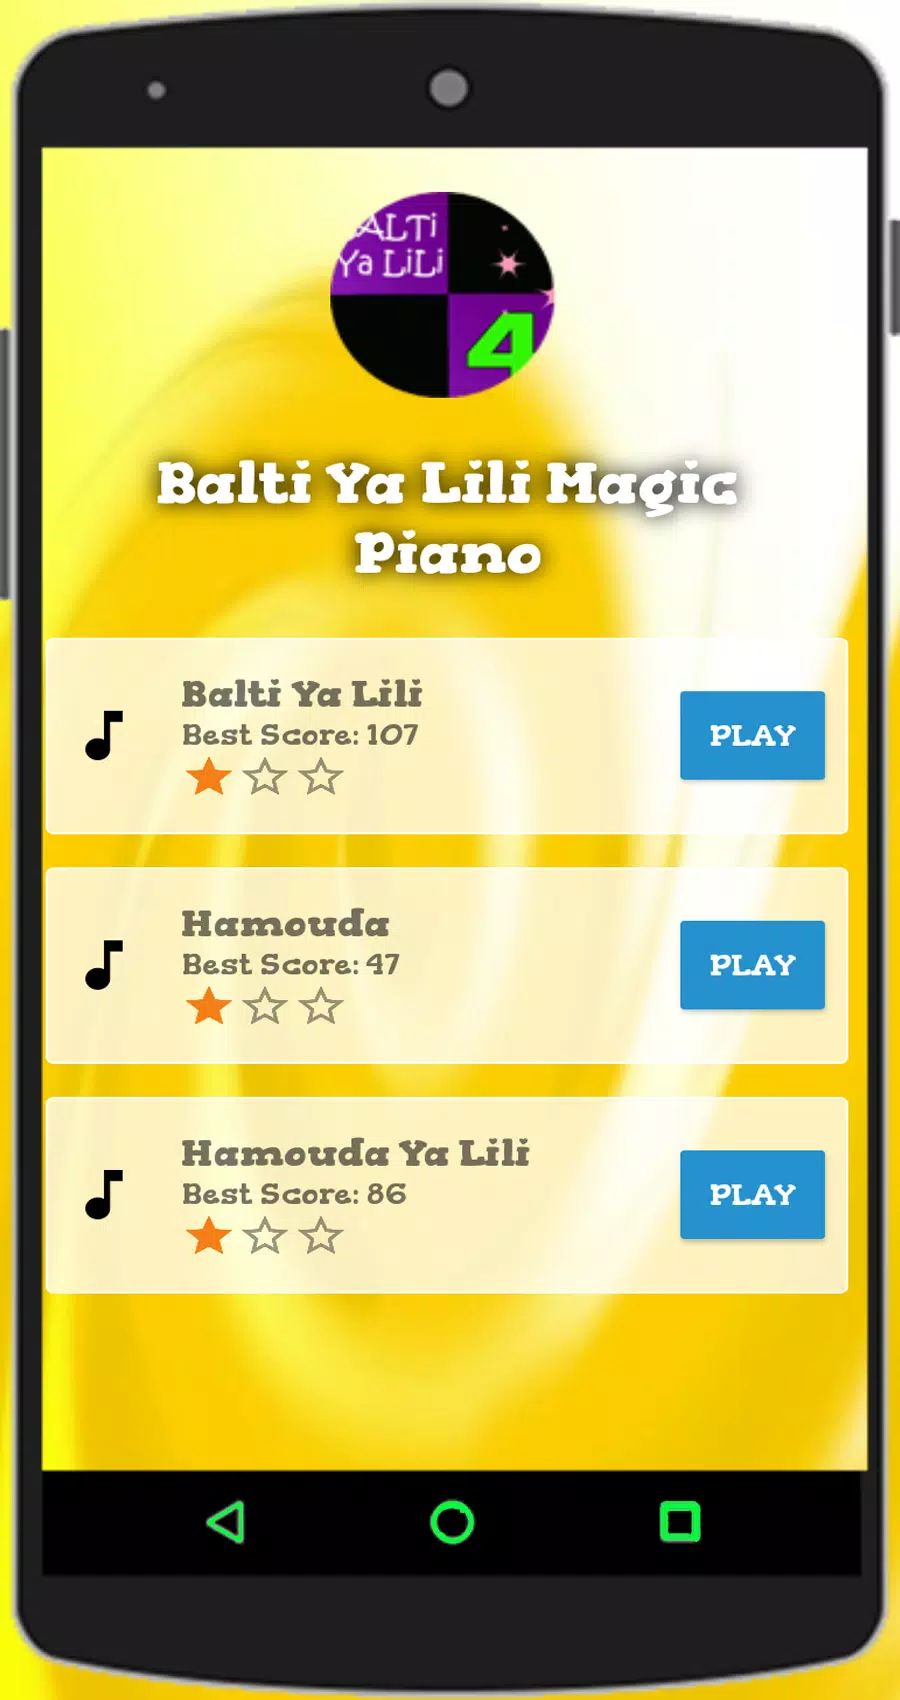 Balti Ya Lili Magic Piano APK for Android Download